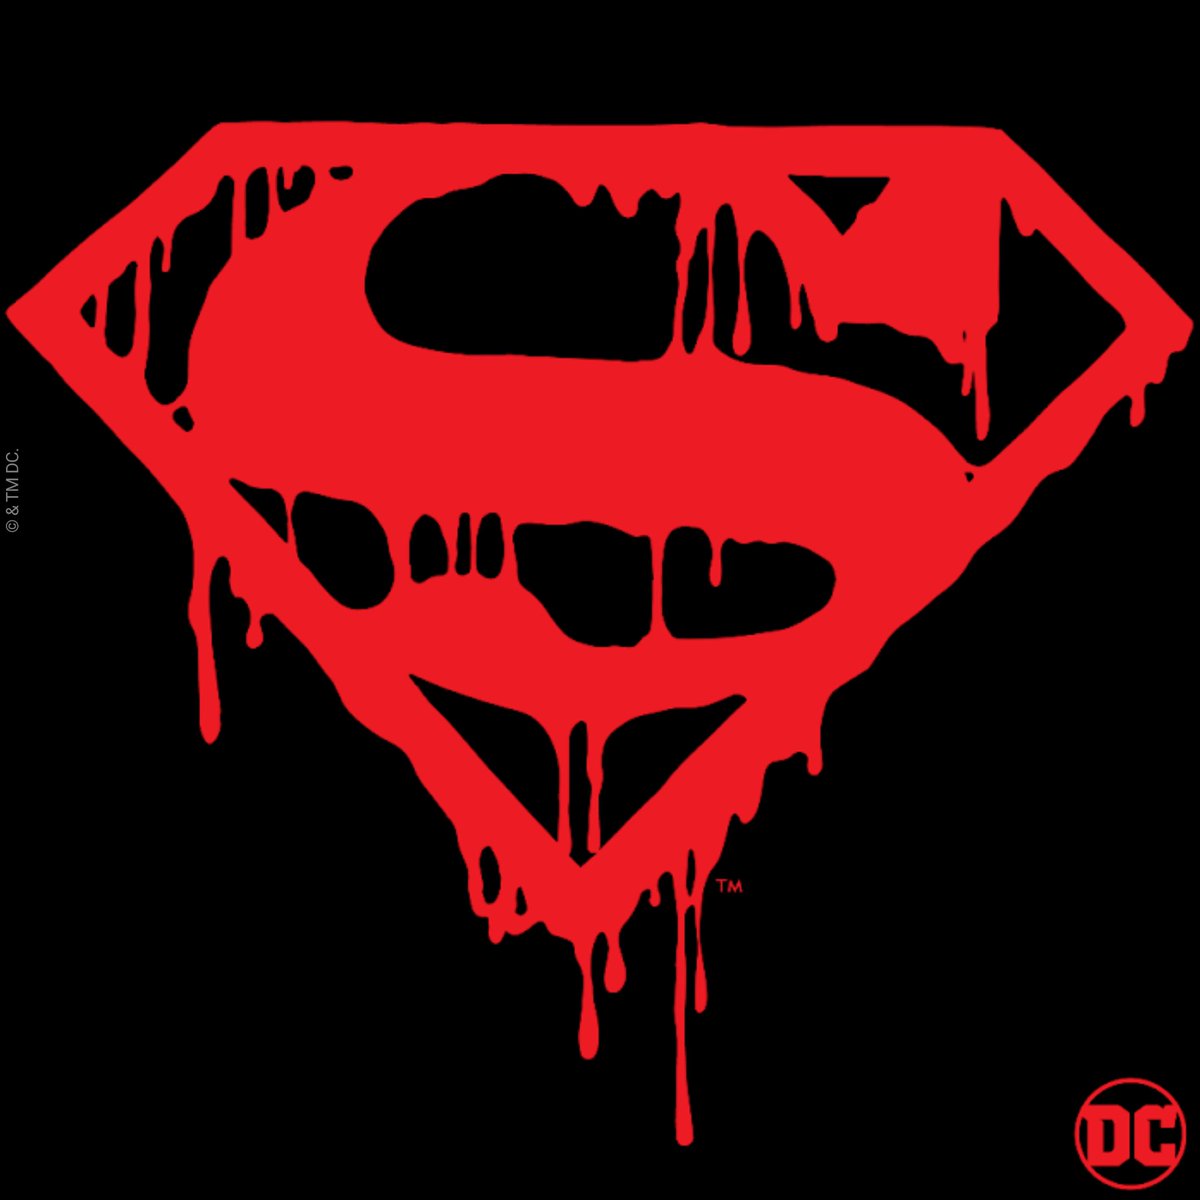 Death of Superman